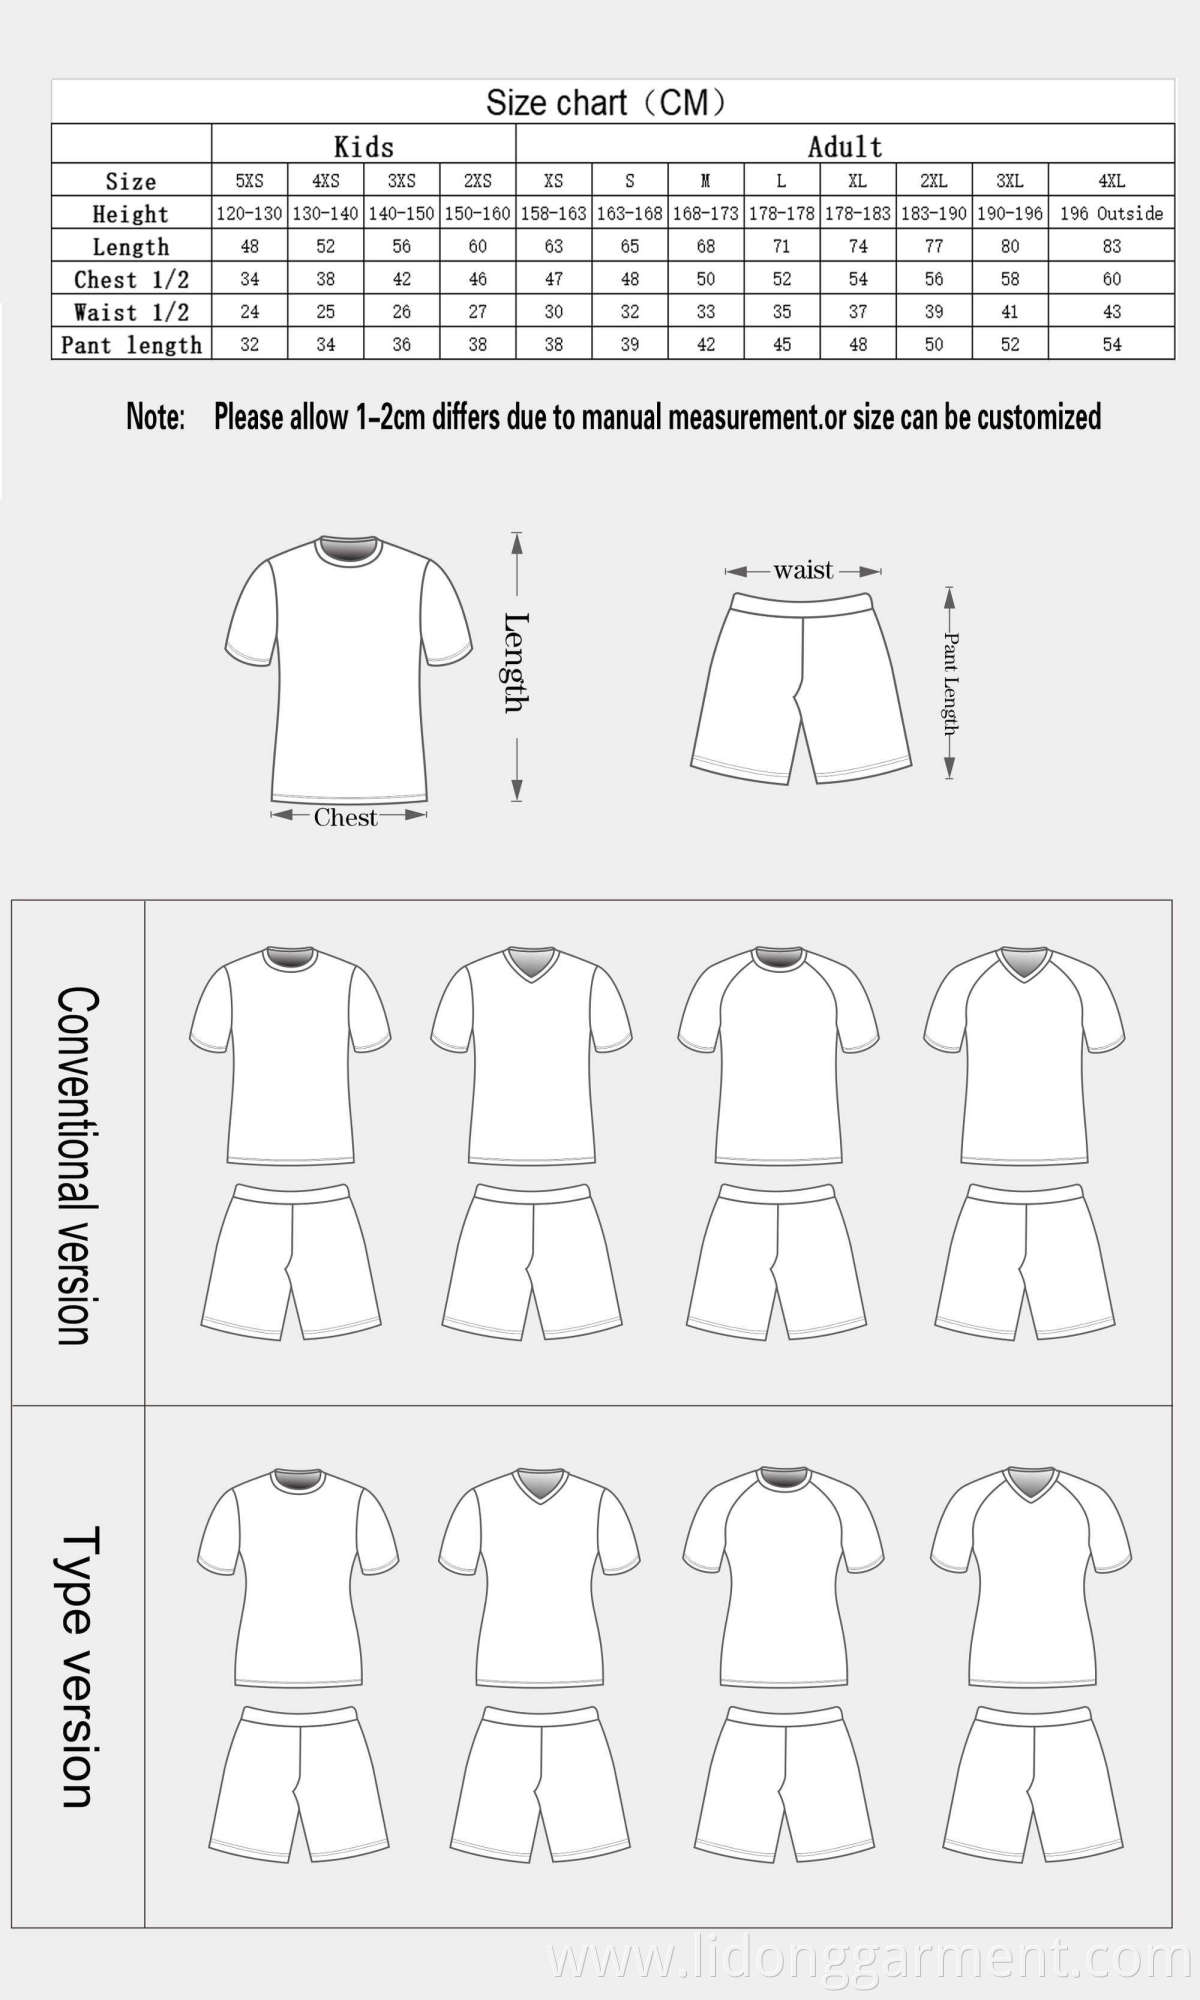 100% polyester Digital Sublimation Printing Cheap football Jersey custom soccer uniform sets